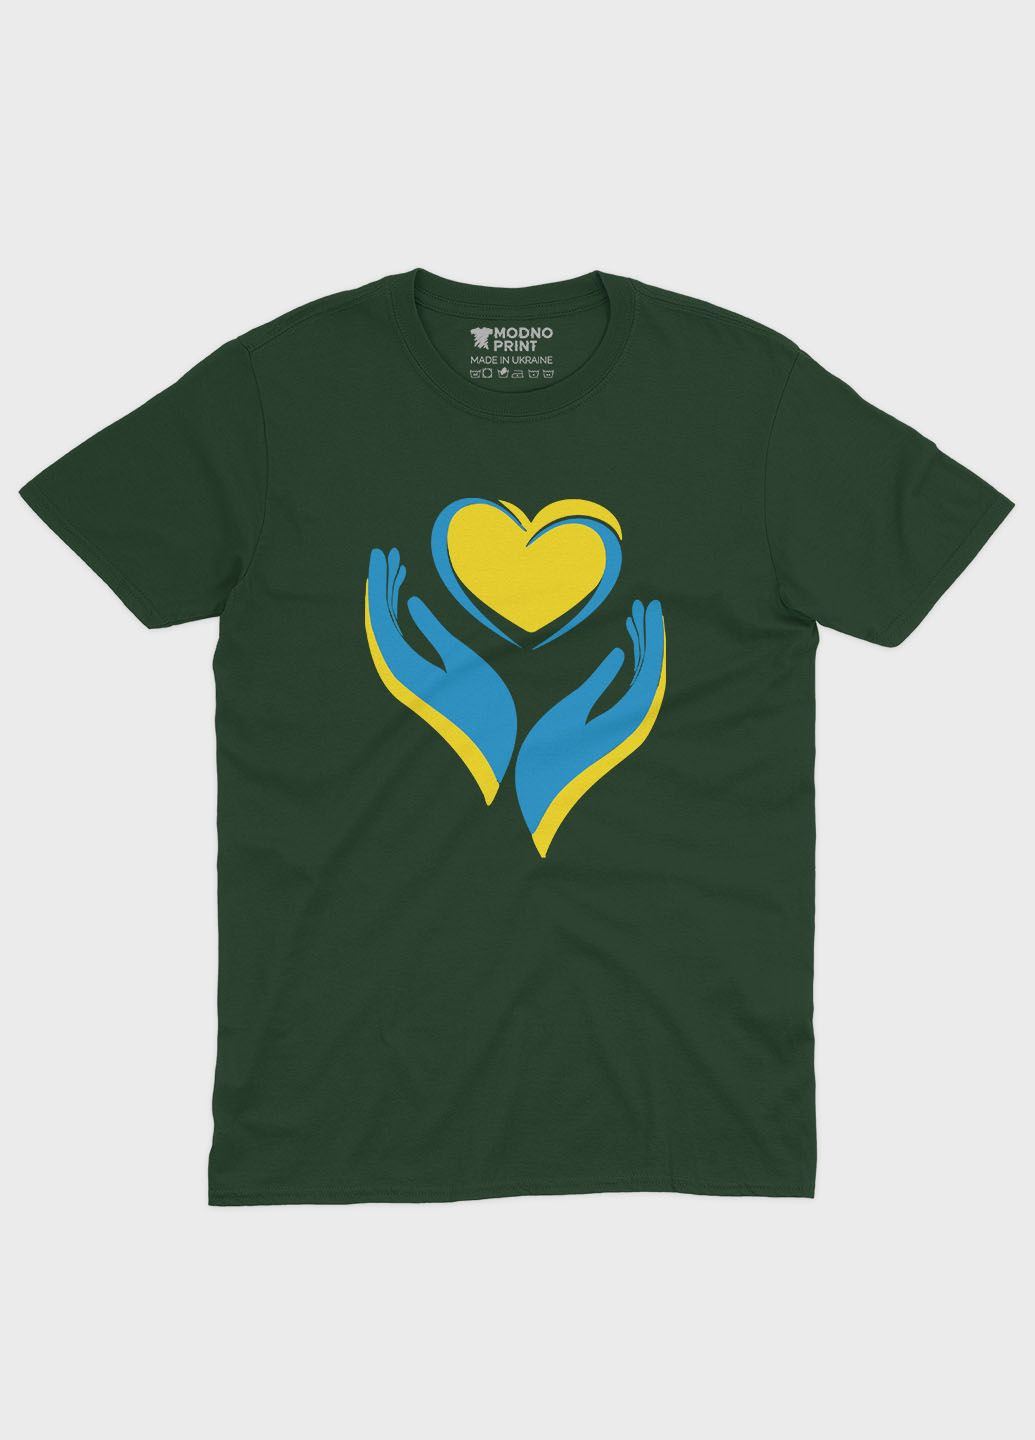 Темно-зеленая летняя женская футболка с патриотическим принтом сердце и лодони (ts001-2-bog-005-1-029-f) Modno